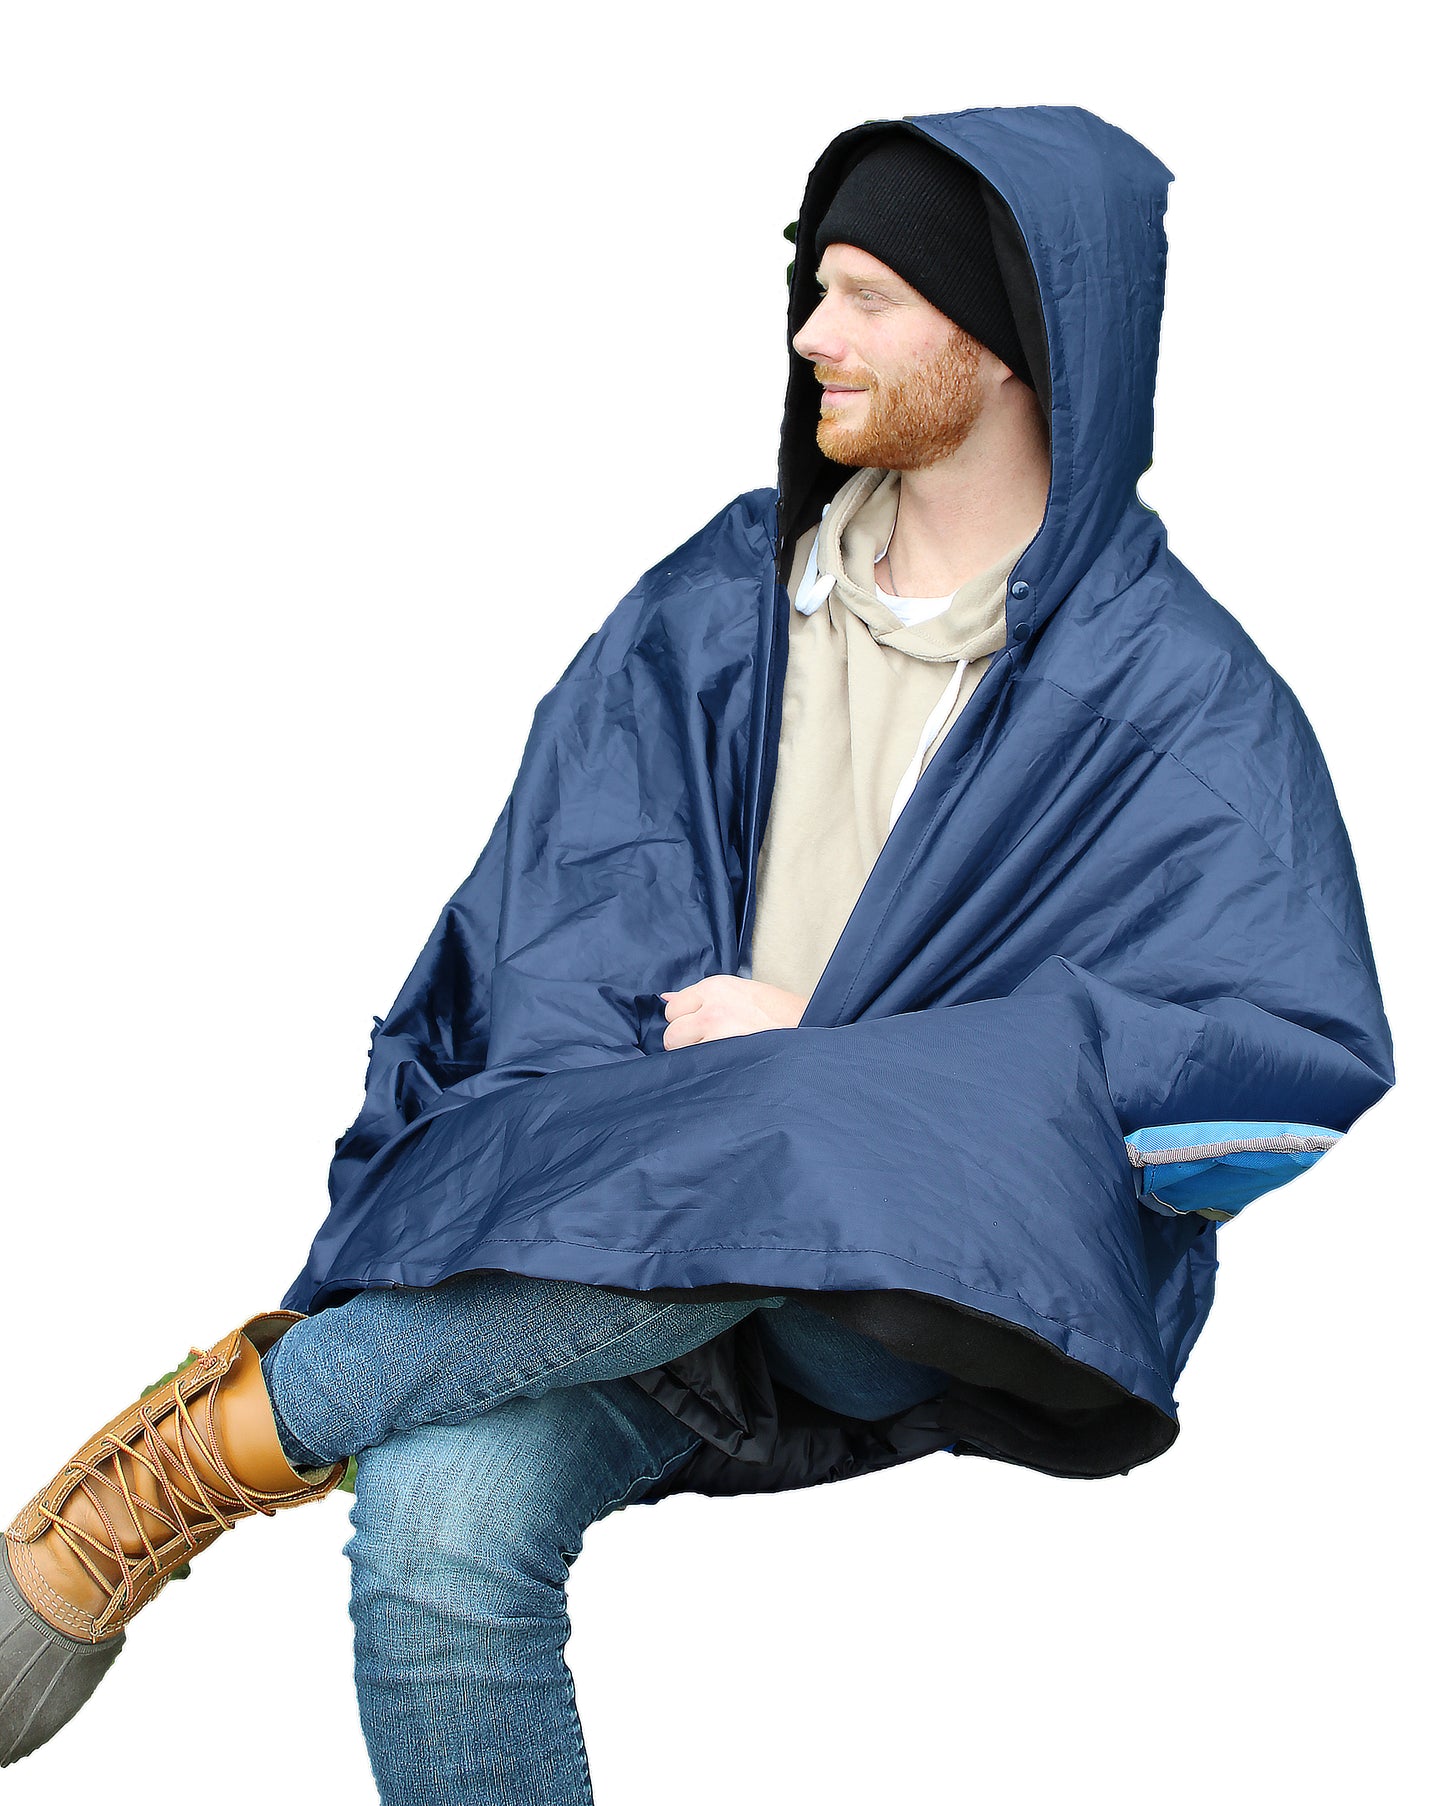 AnyWear Cushion - Fleece Interior & Weather Resistant Exterior - Fiber Filled